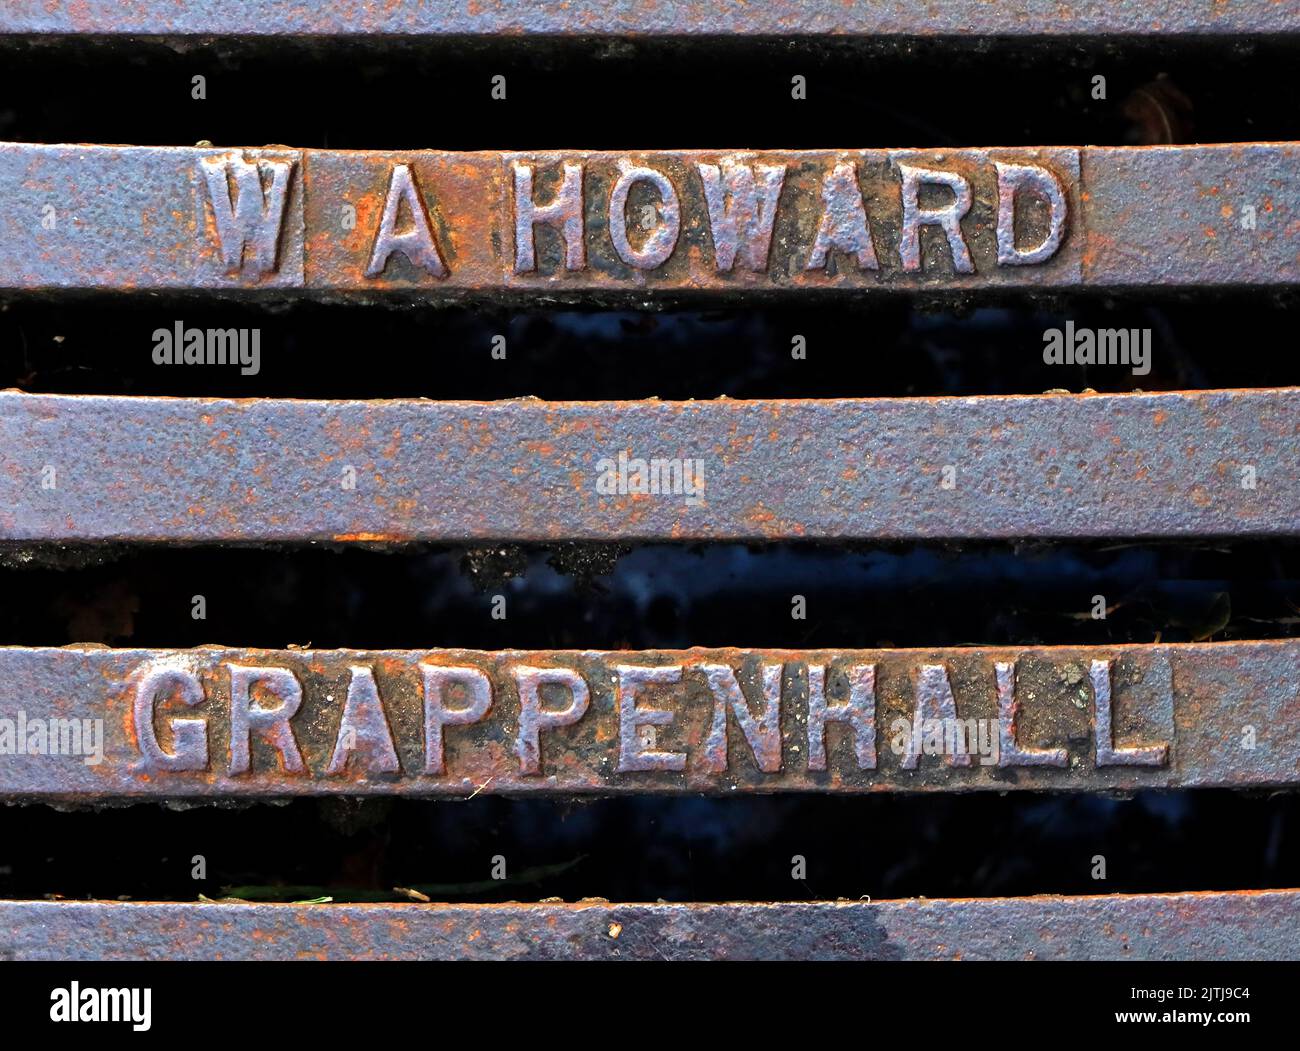 WA Howard,Grappenhall embossed cast iron grid, Warrington, Cheshire, England, UK, WA4 2SJ Stock Photo